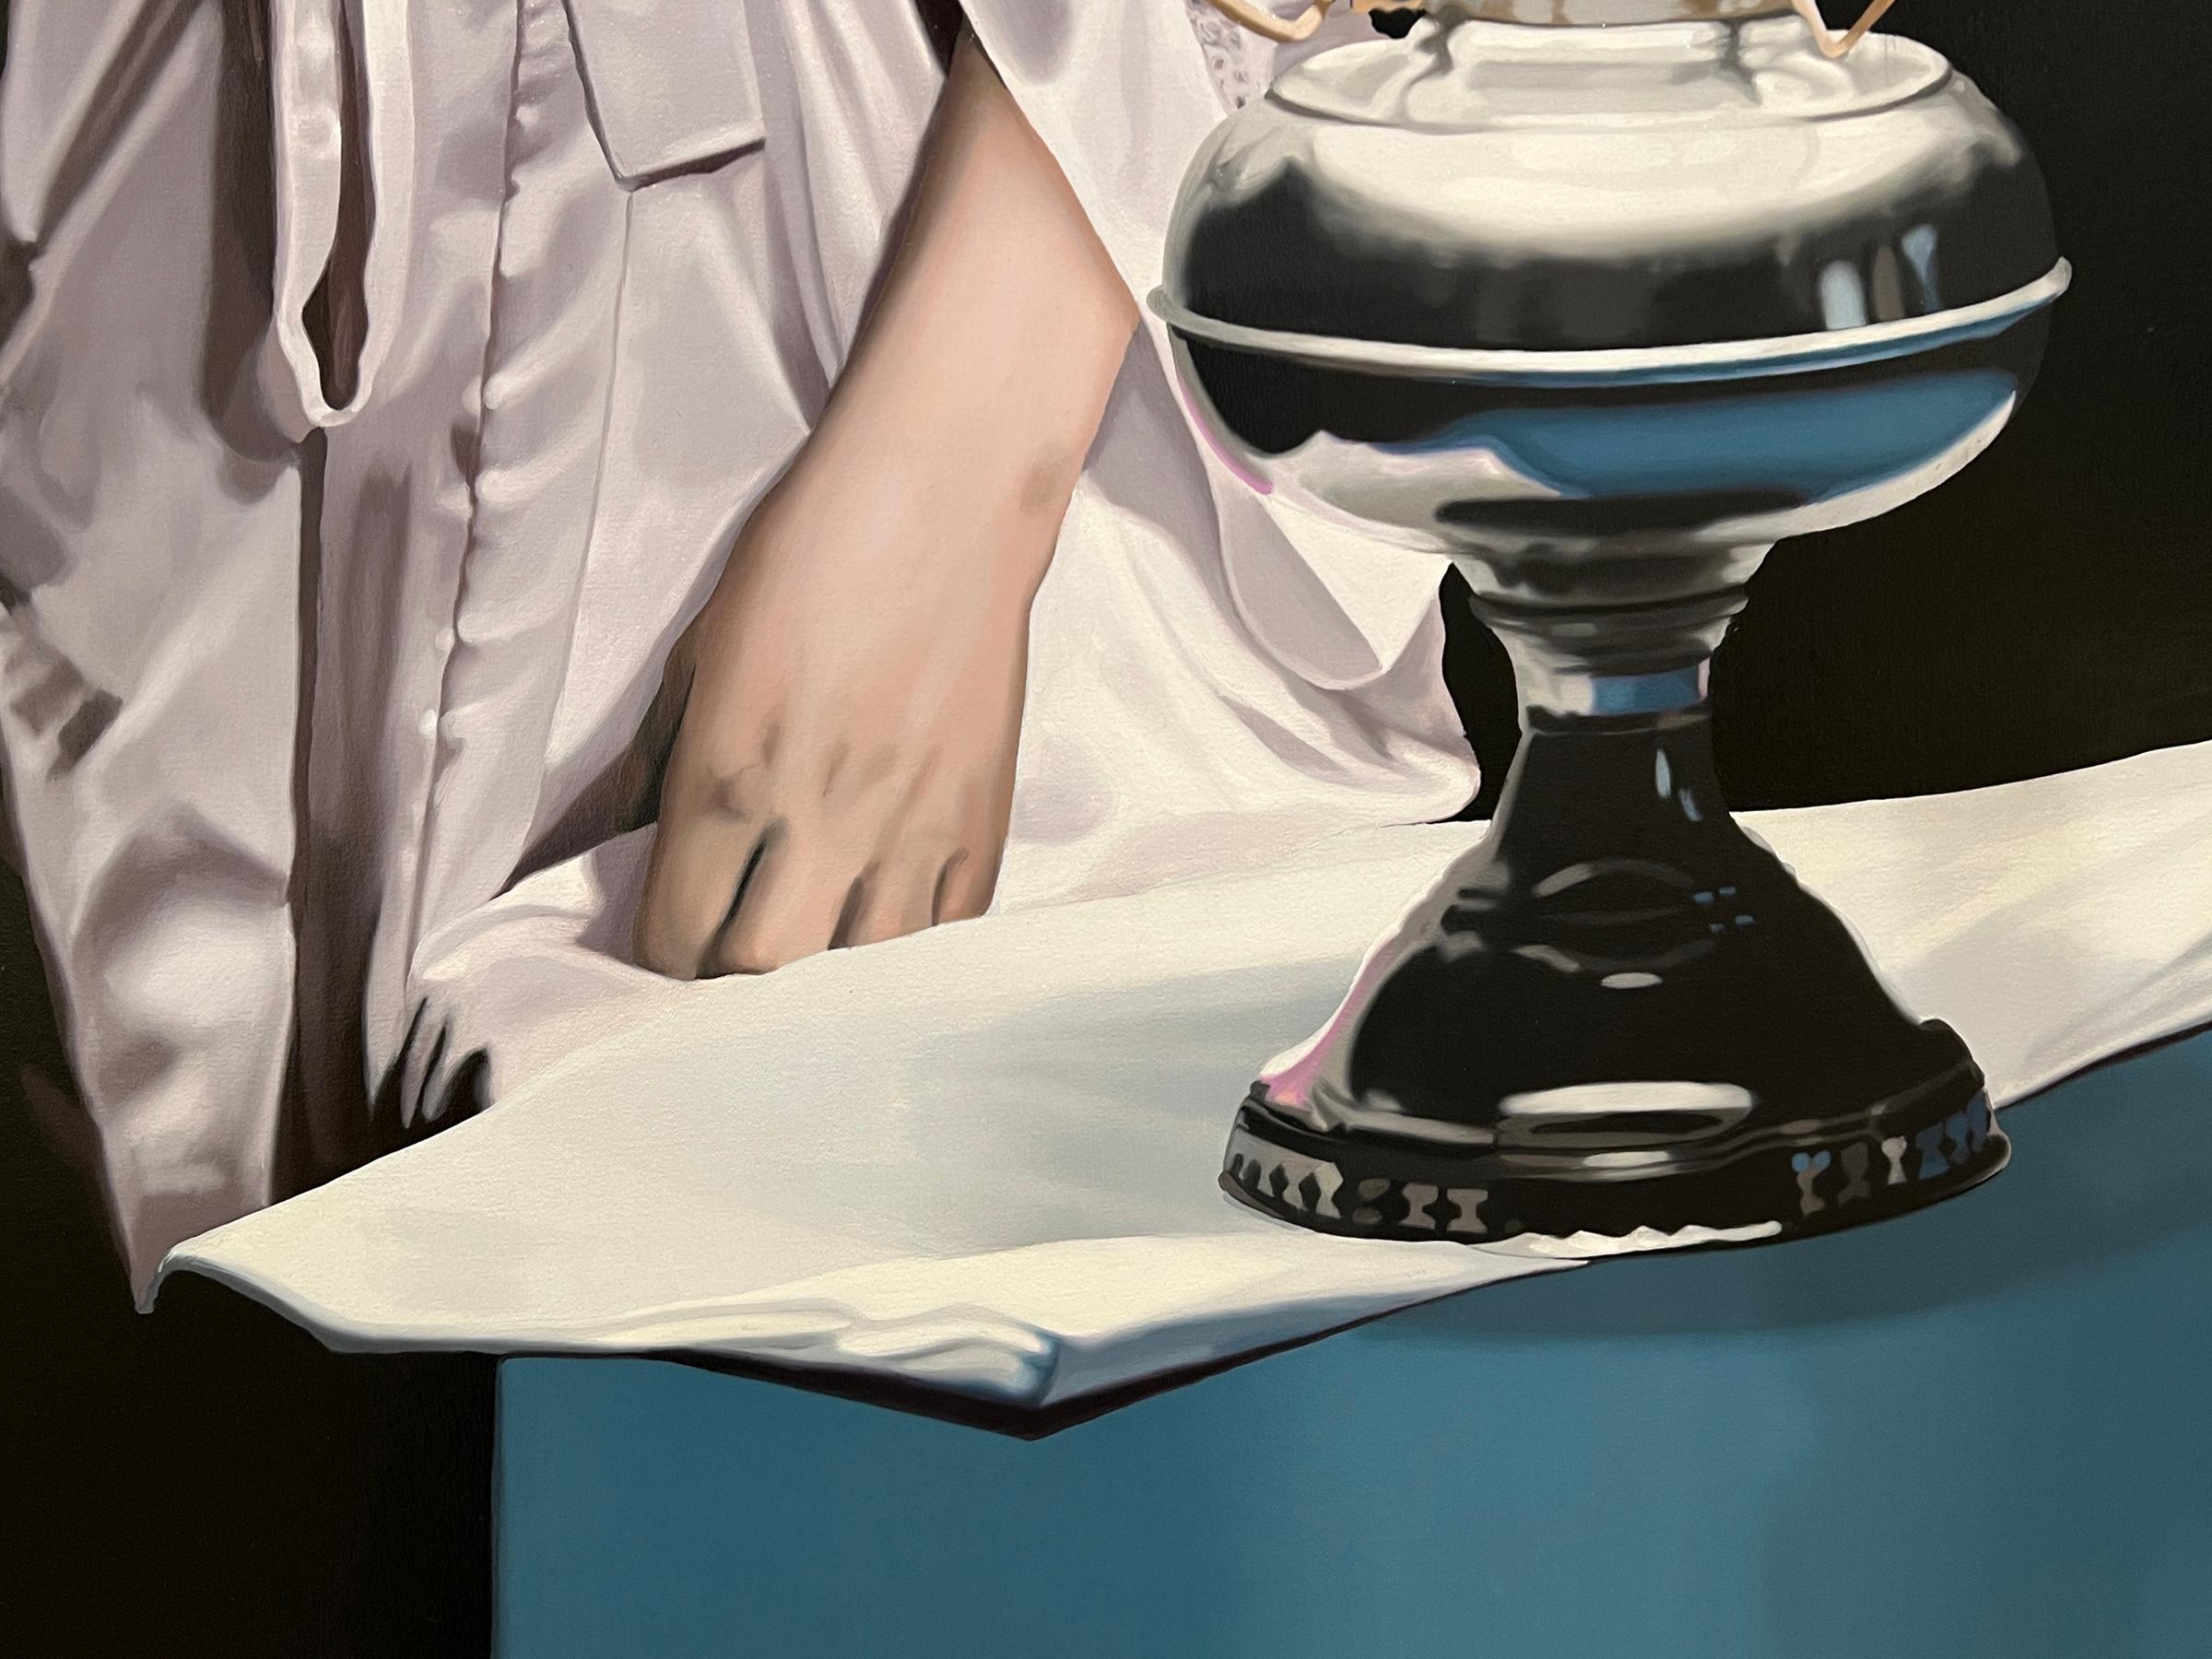 LAMP BLACK - Portrait / Dark colors / Female Figure / Photorealism / Blue / Lamp - Contemporary Painting by Steve Smulka